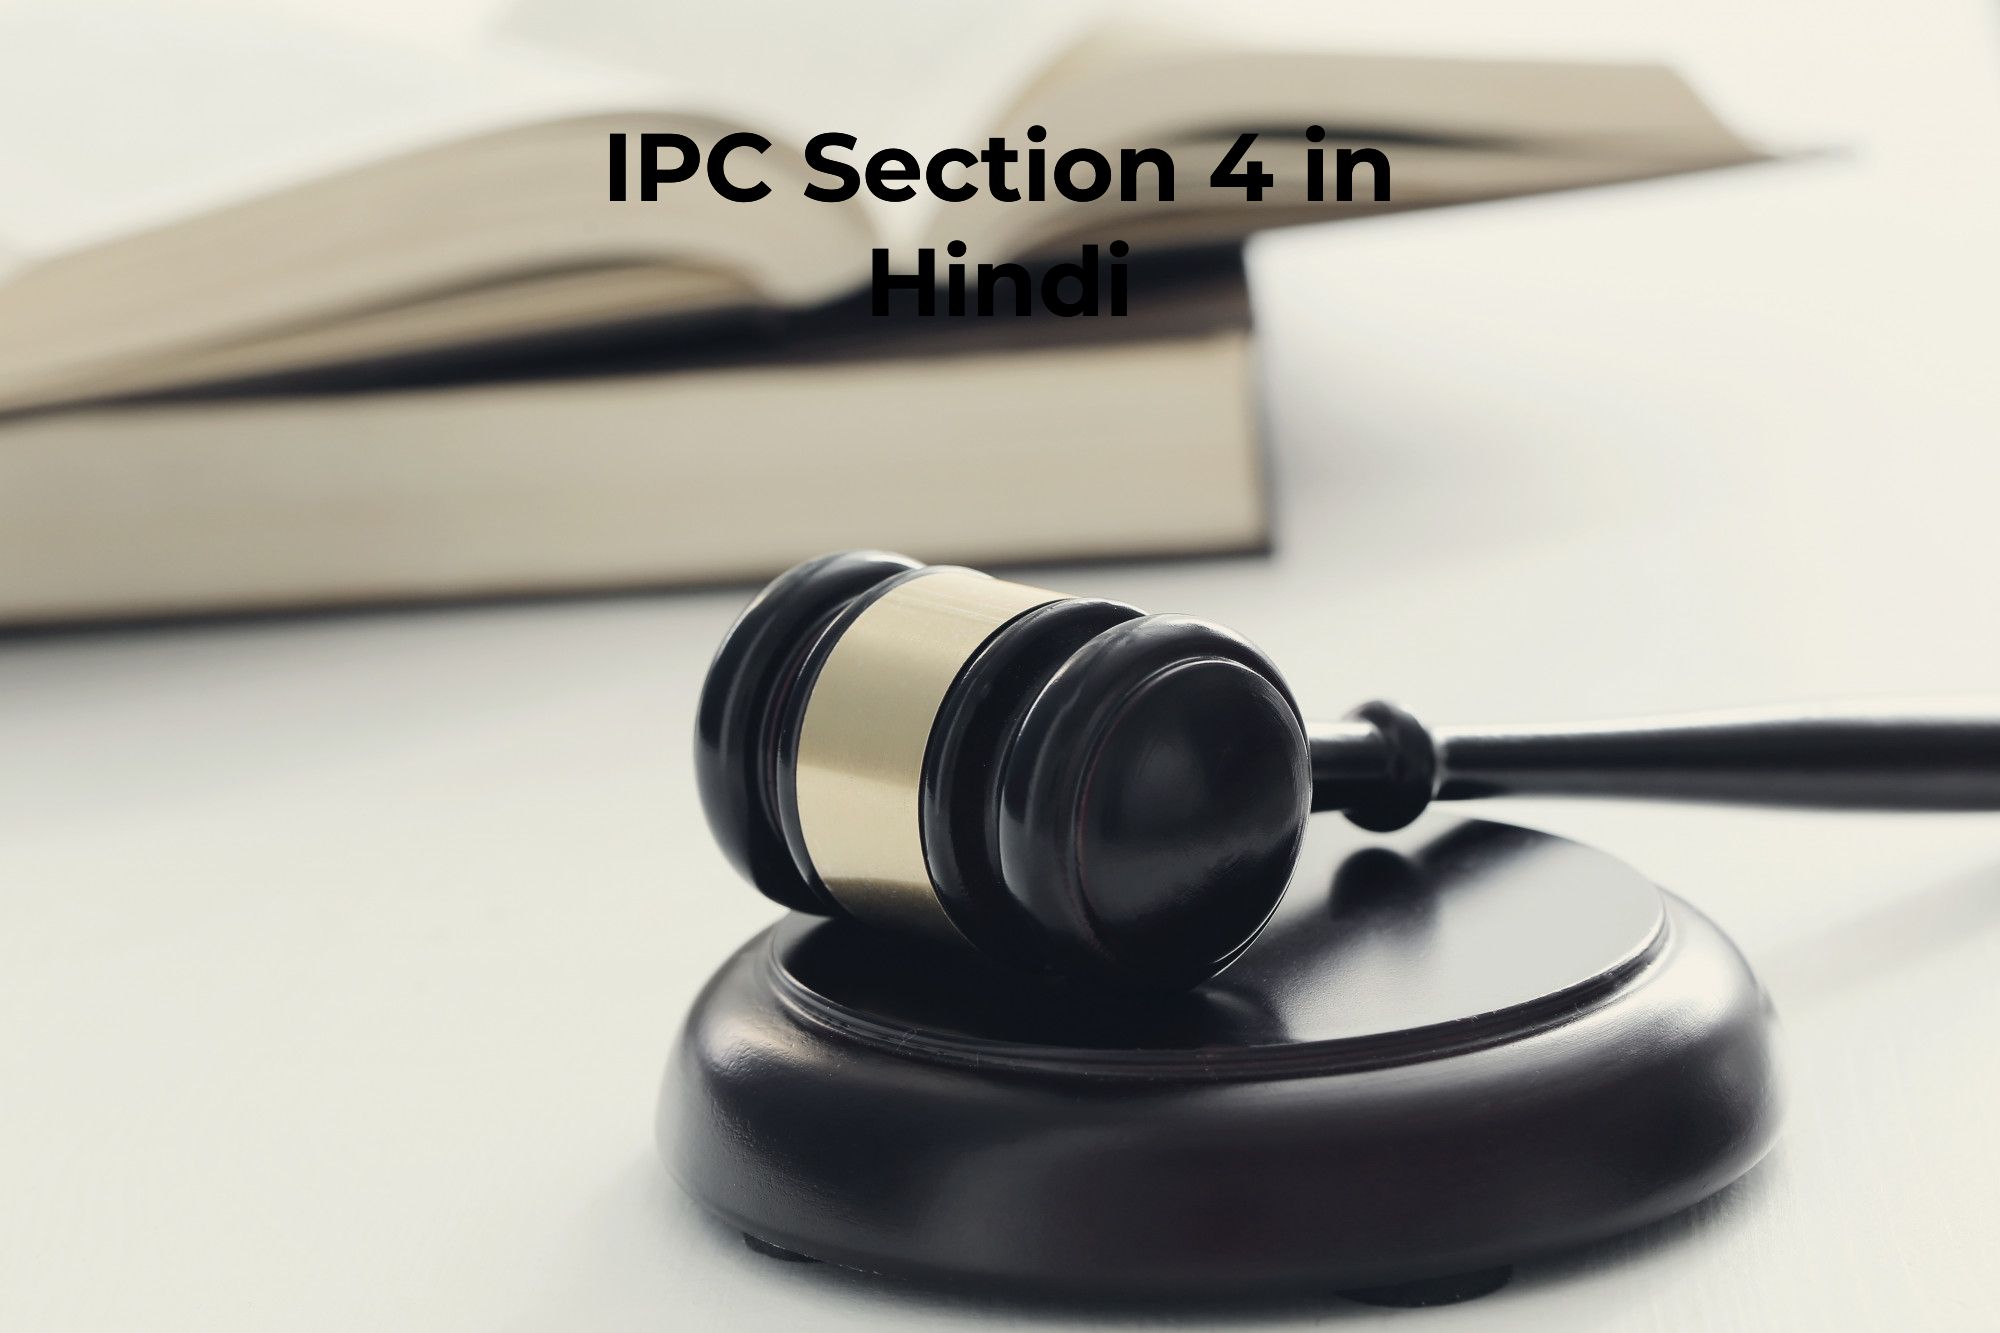 IPC Section 4 in Hindi